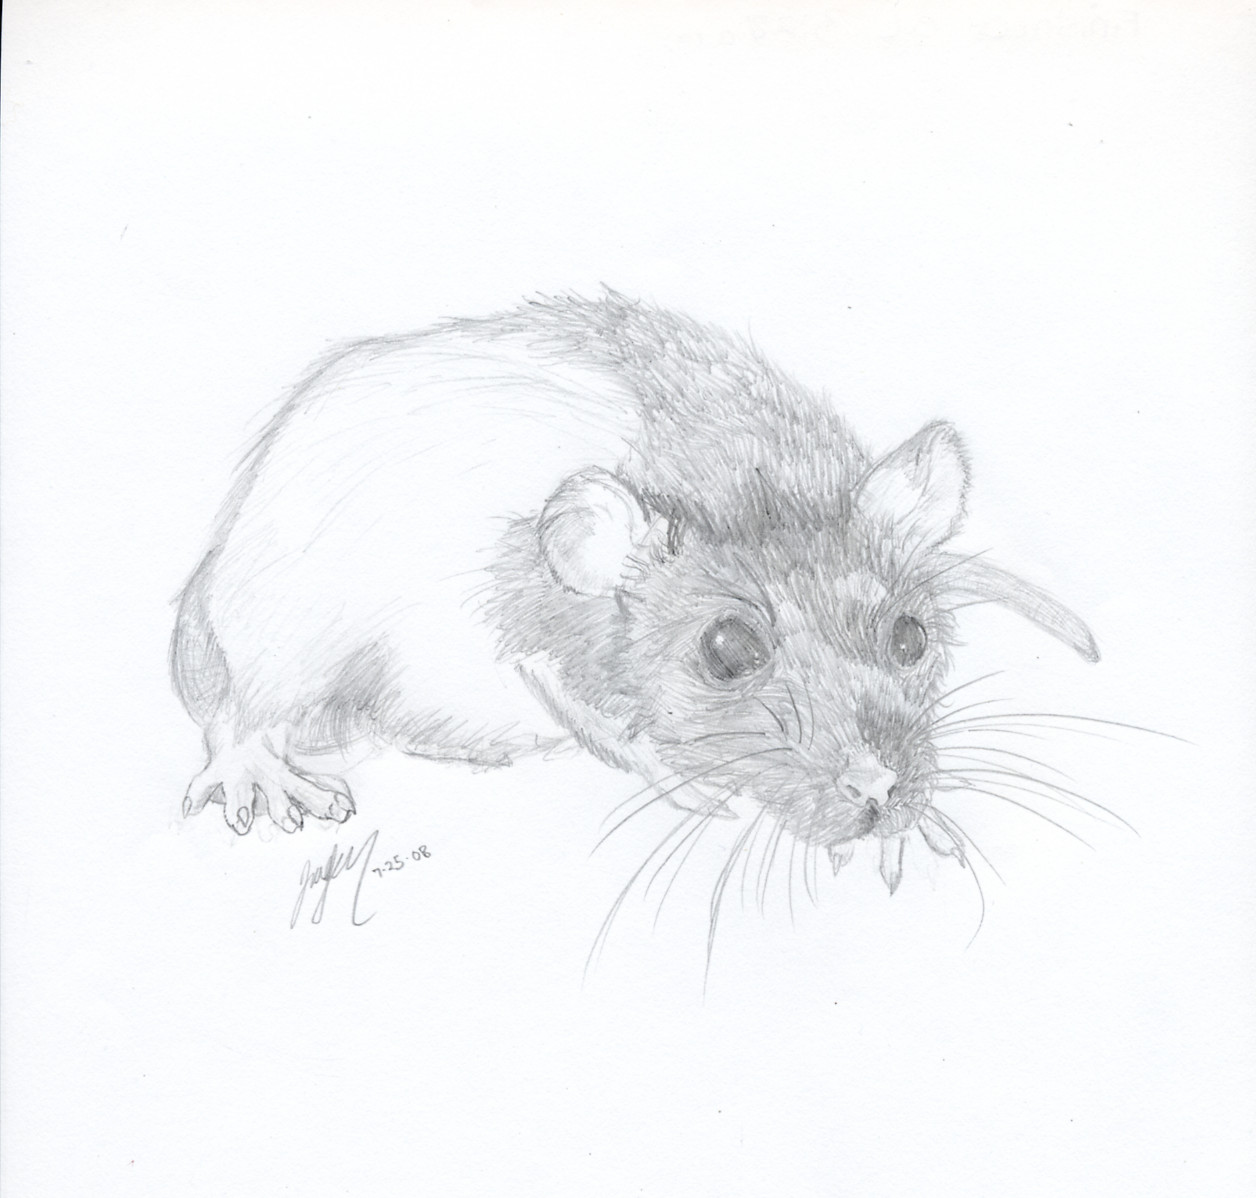 Rat by Mataime